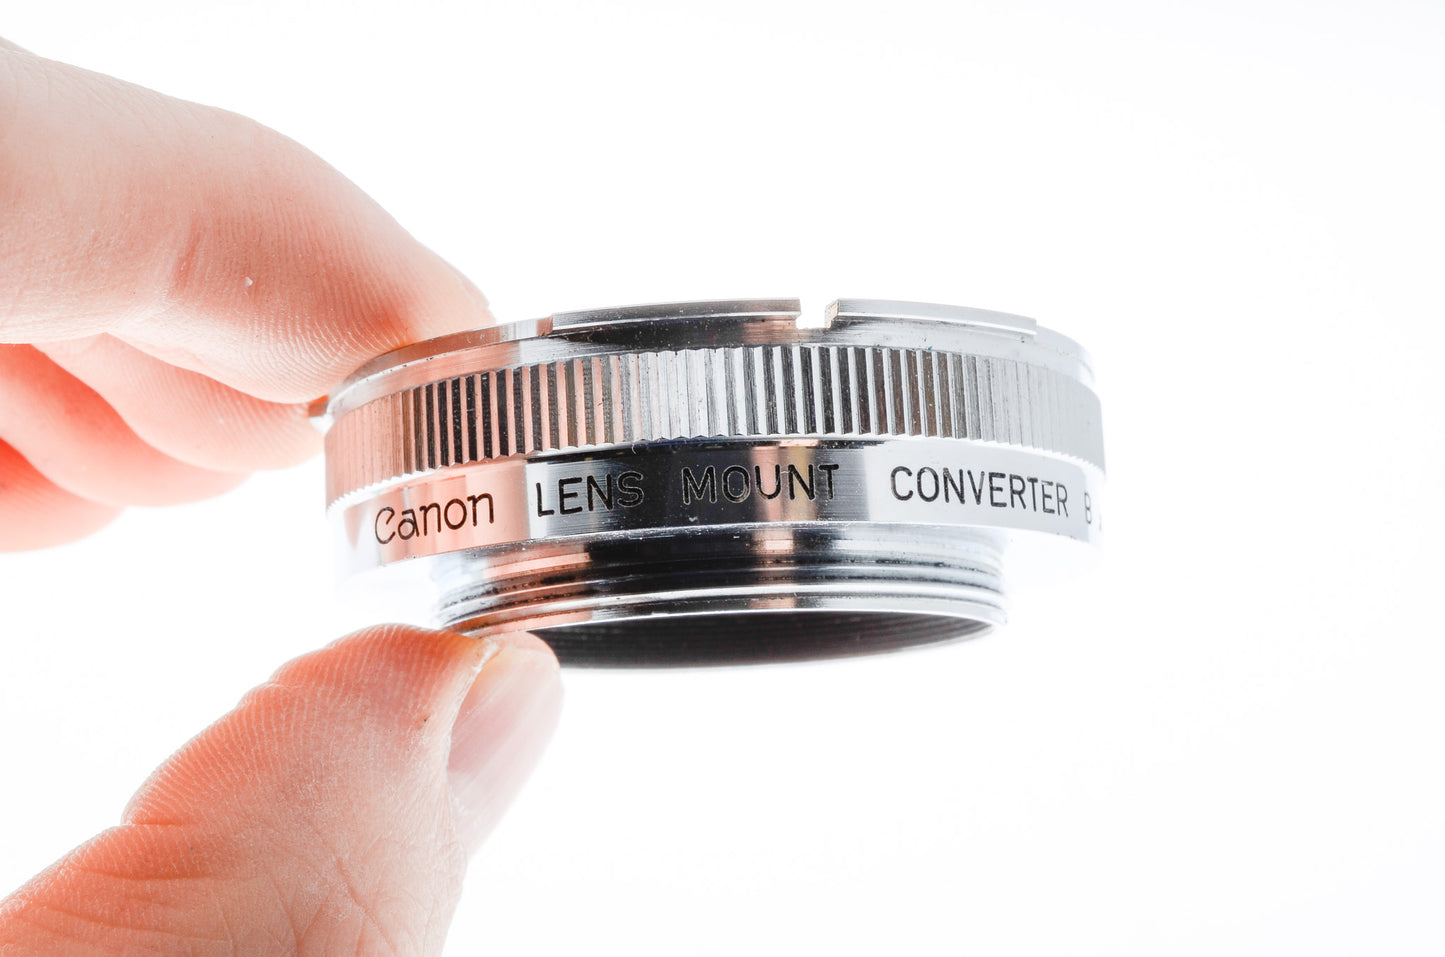 Canon Lens Mount Converter B (FD - Leica M39) - Lens Adapter